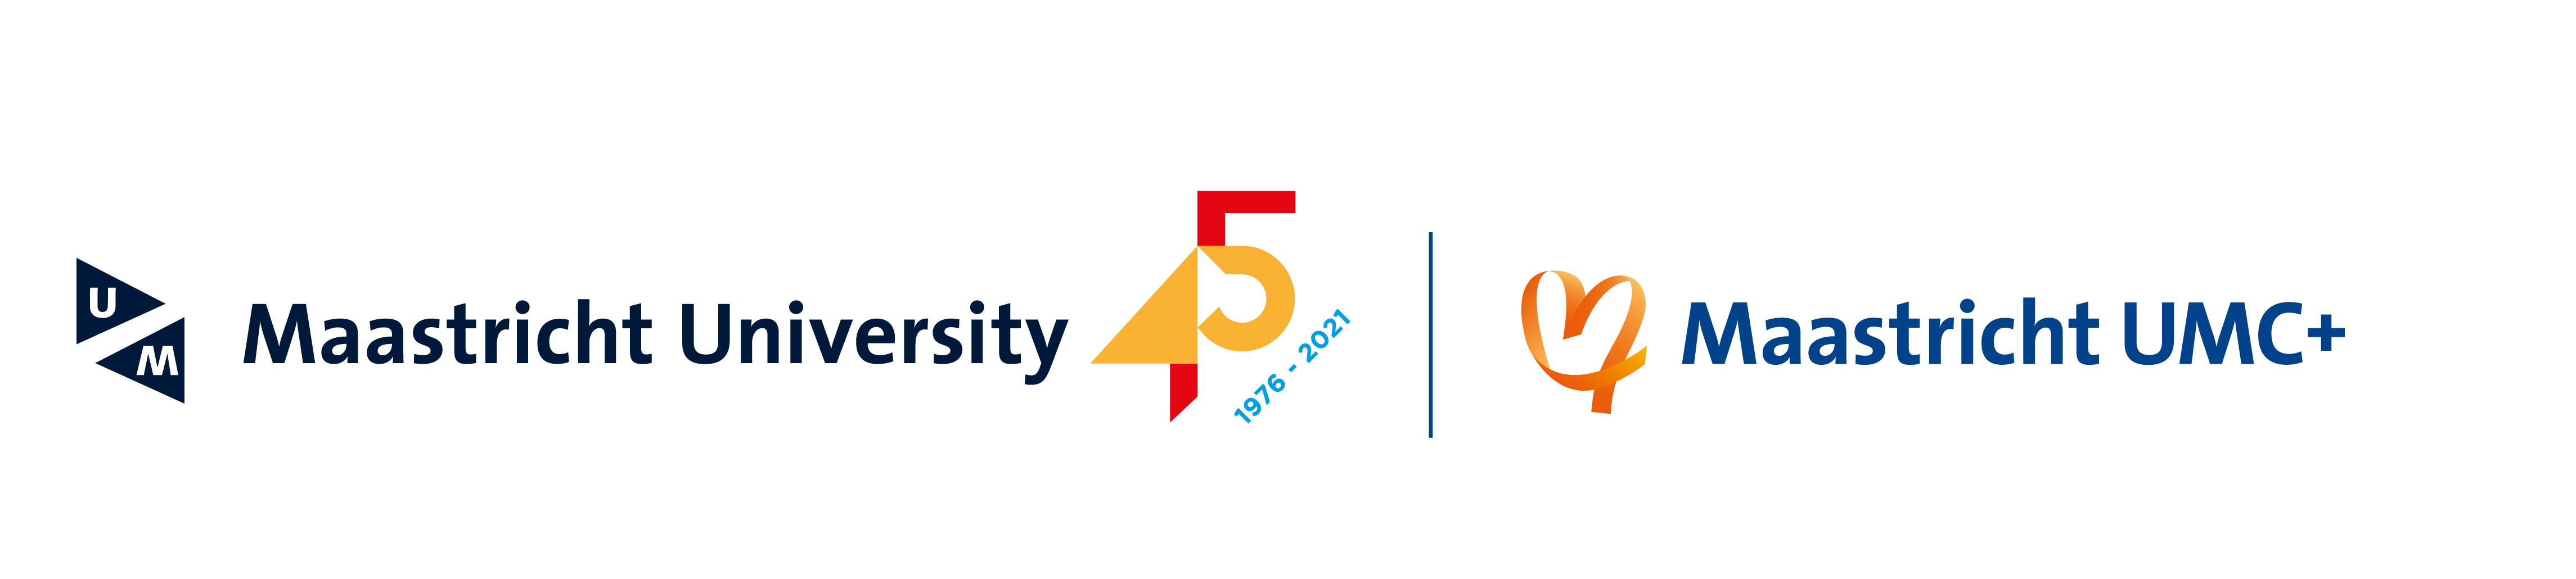 Lustrum logo to celebrate UM's 45th anniversary